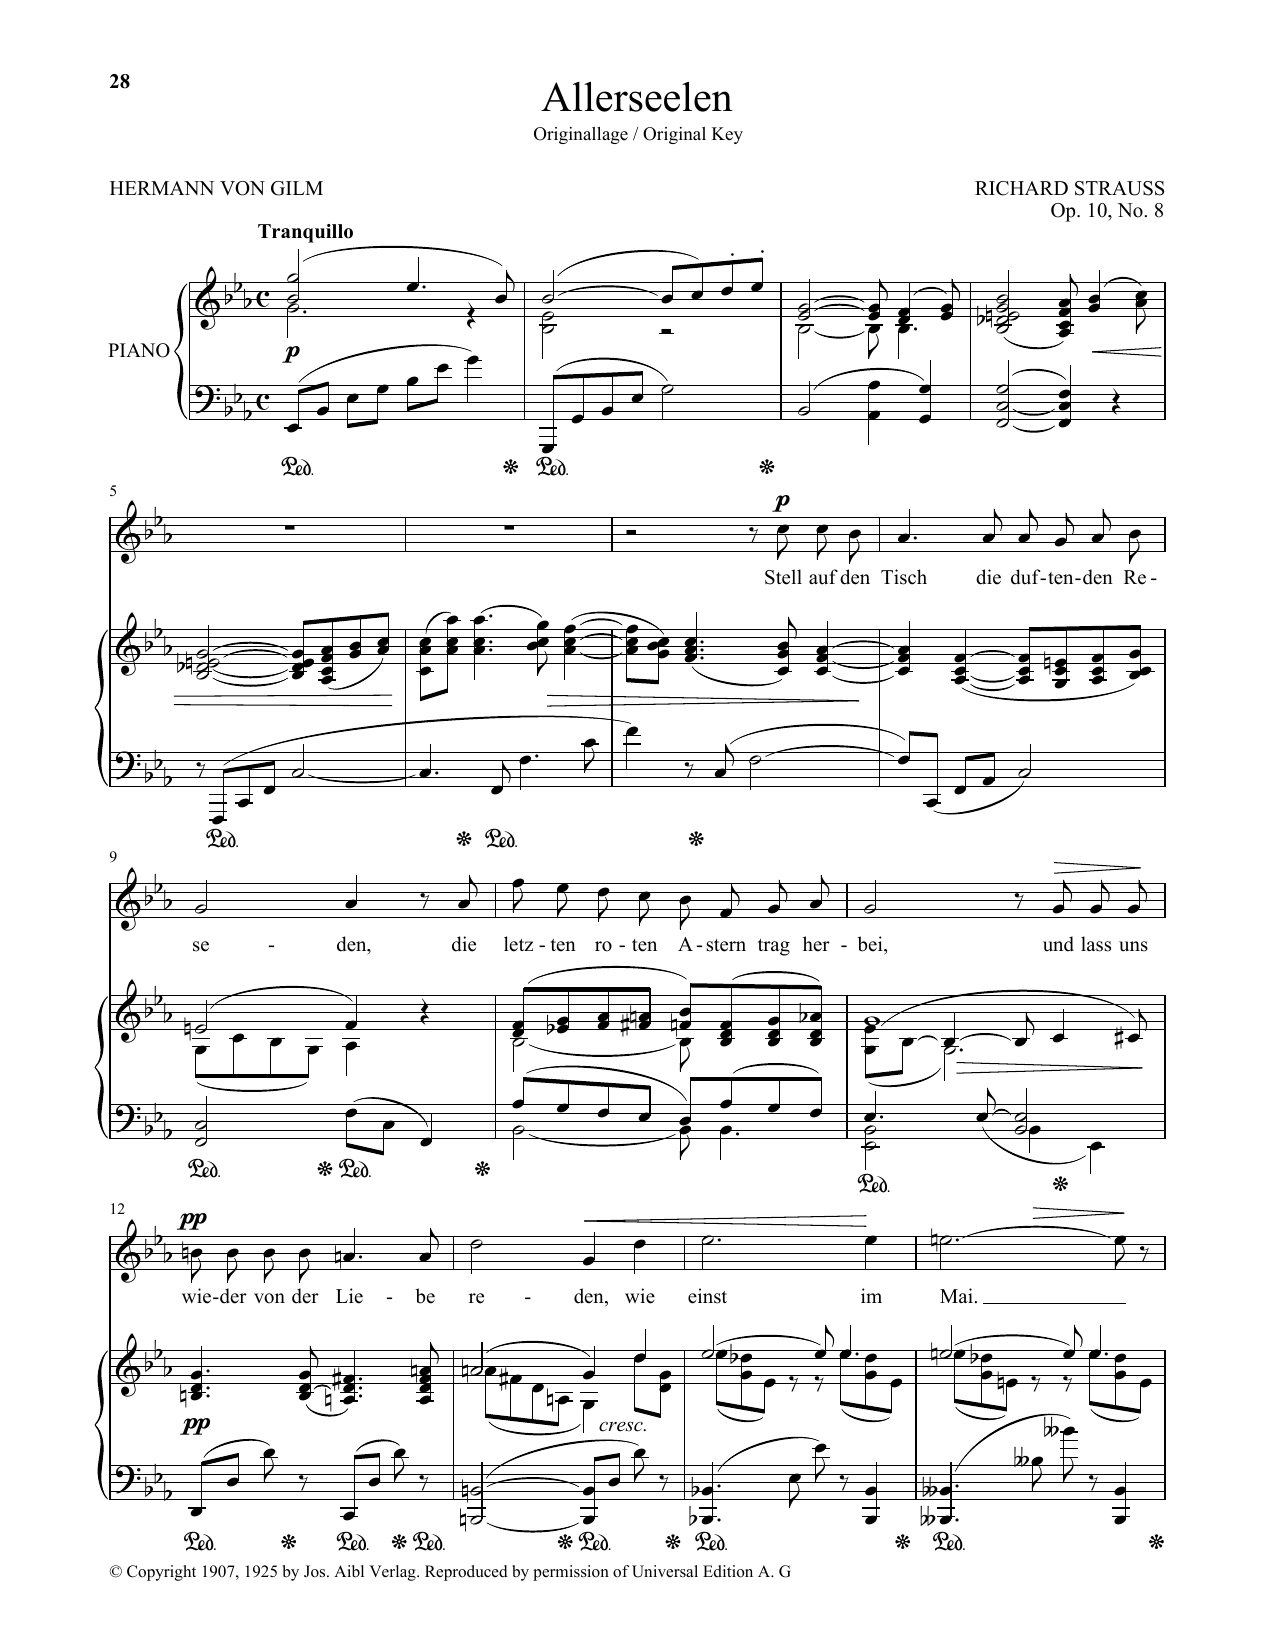 Download Richard Strauss Allerseelen (High Voice) Sheet Music